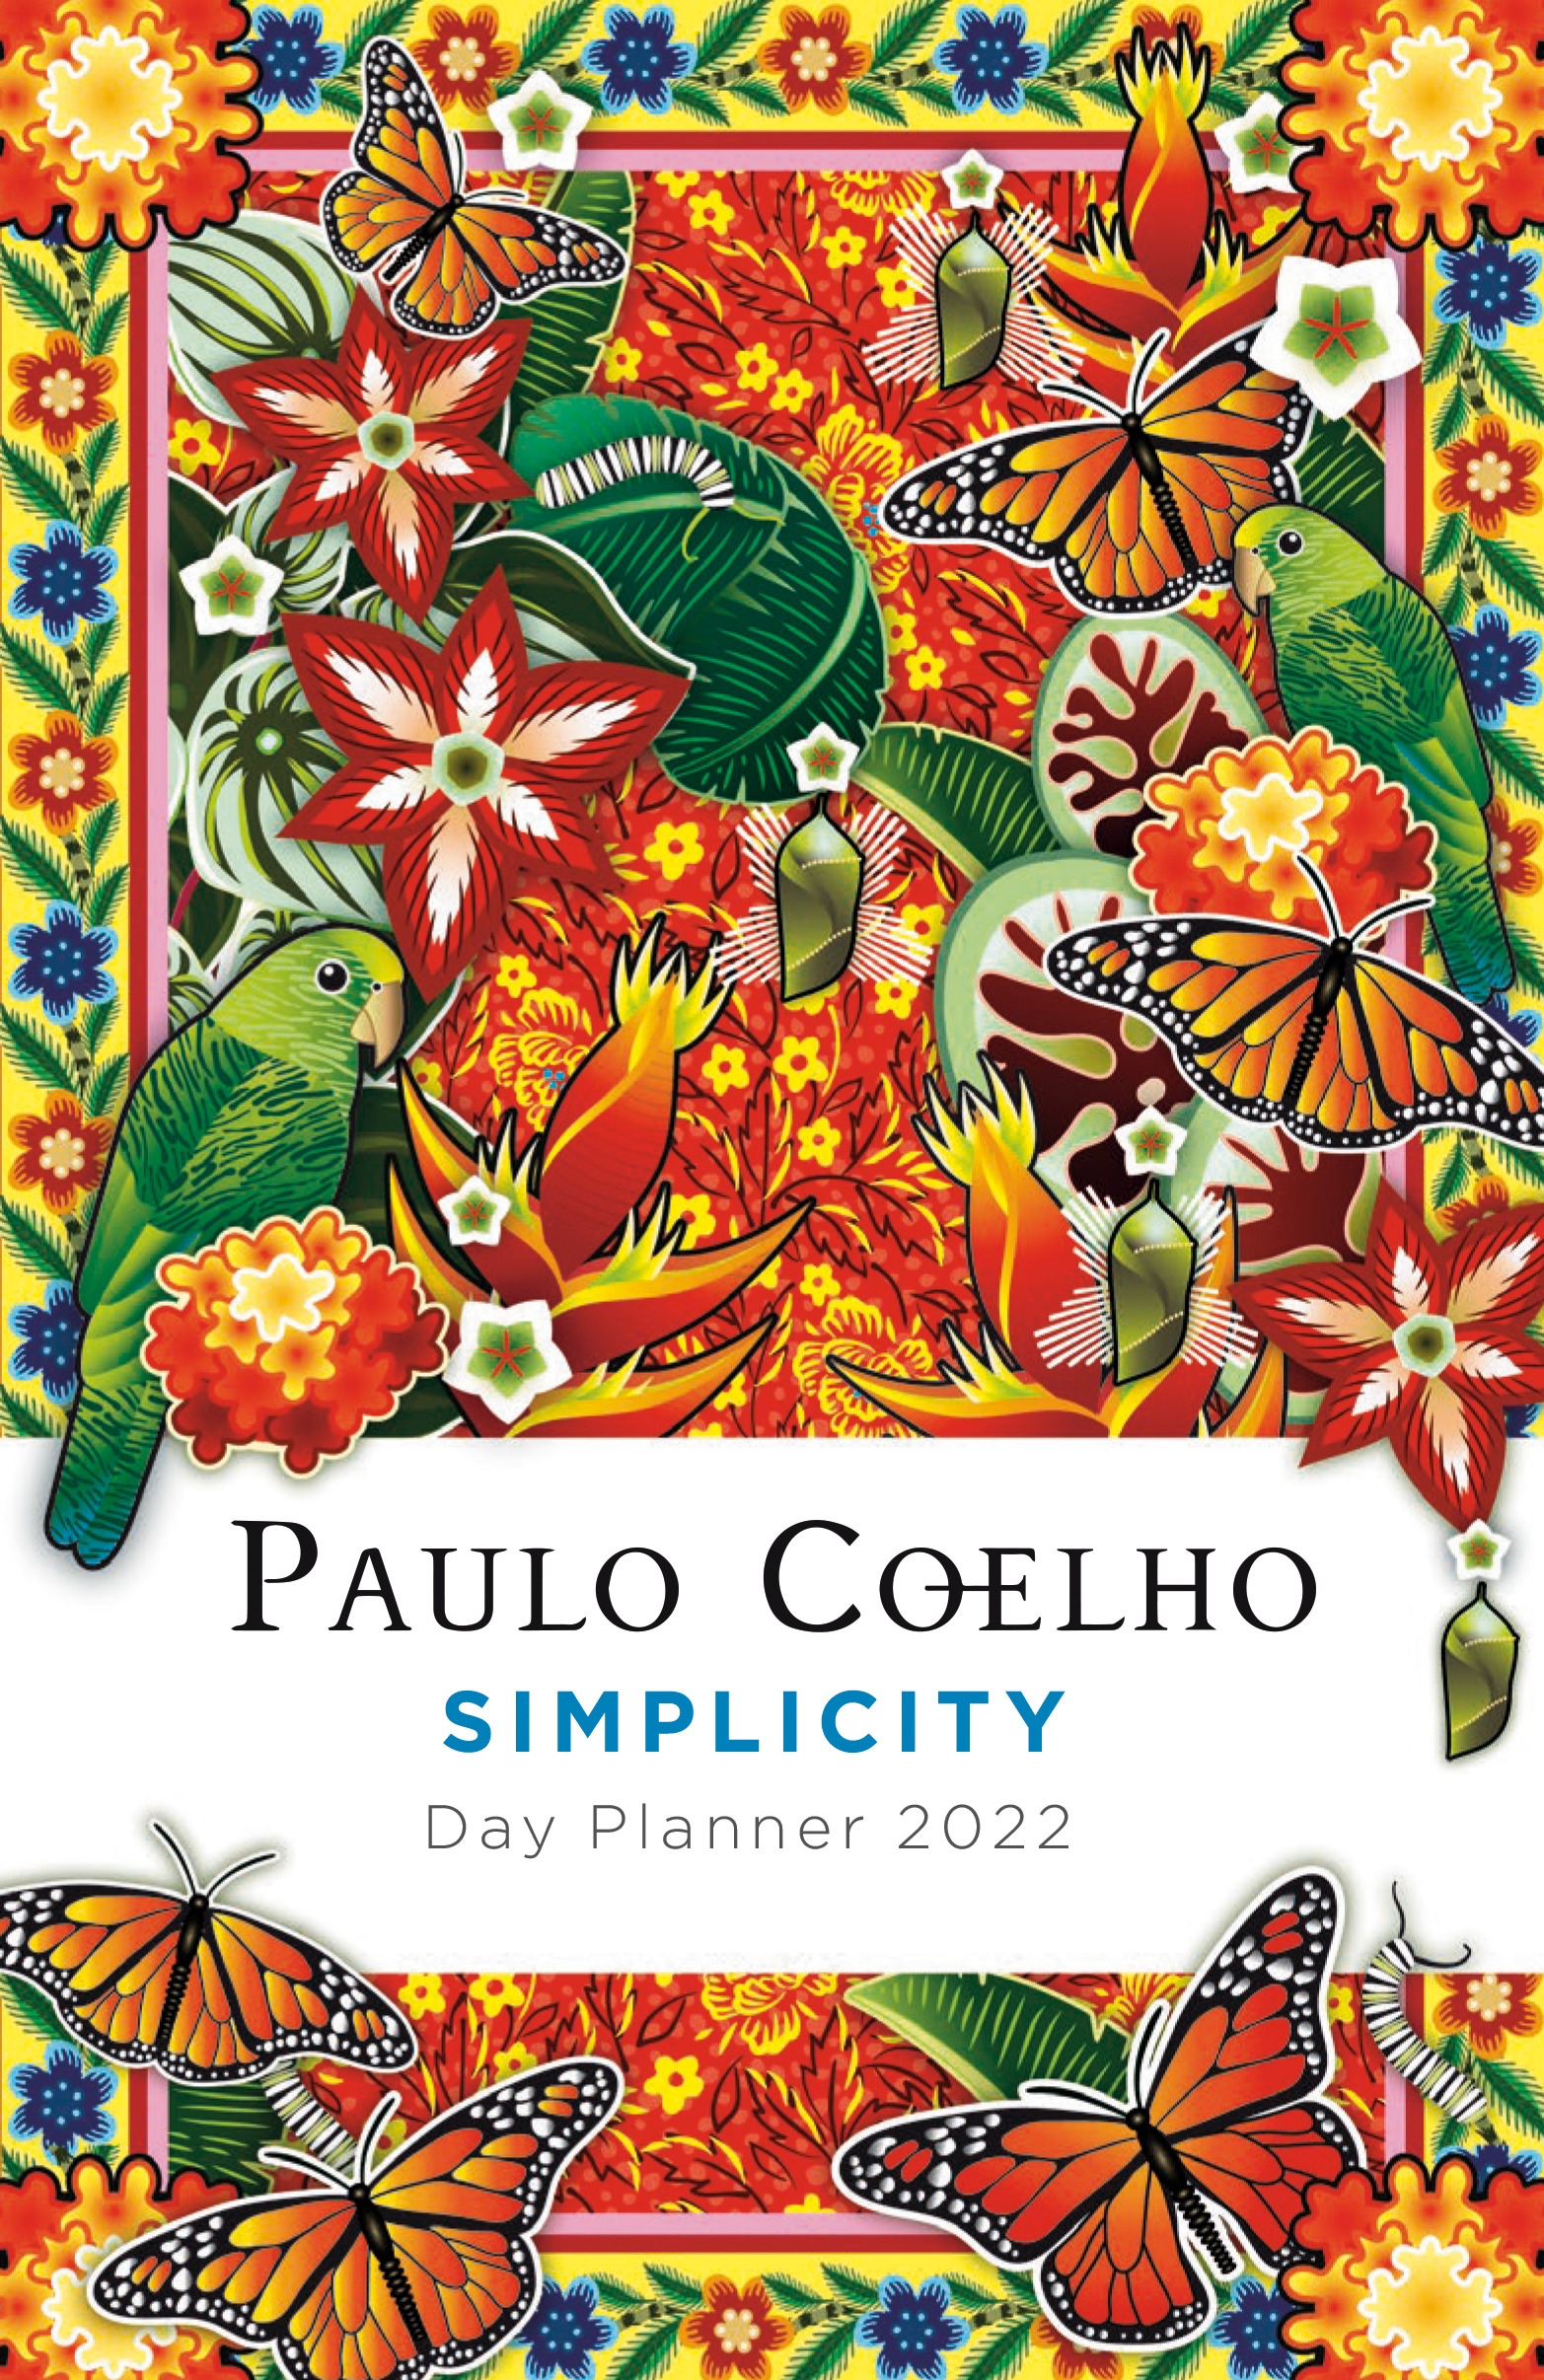 Simplicity by Paulo Coelho - Penguin Books Australia